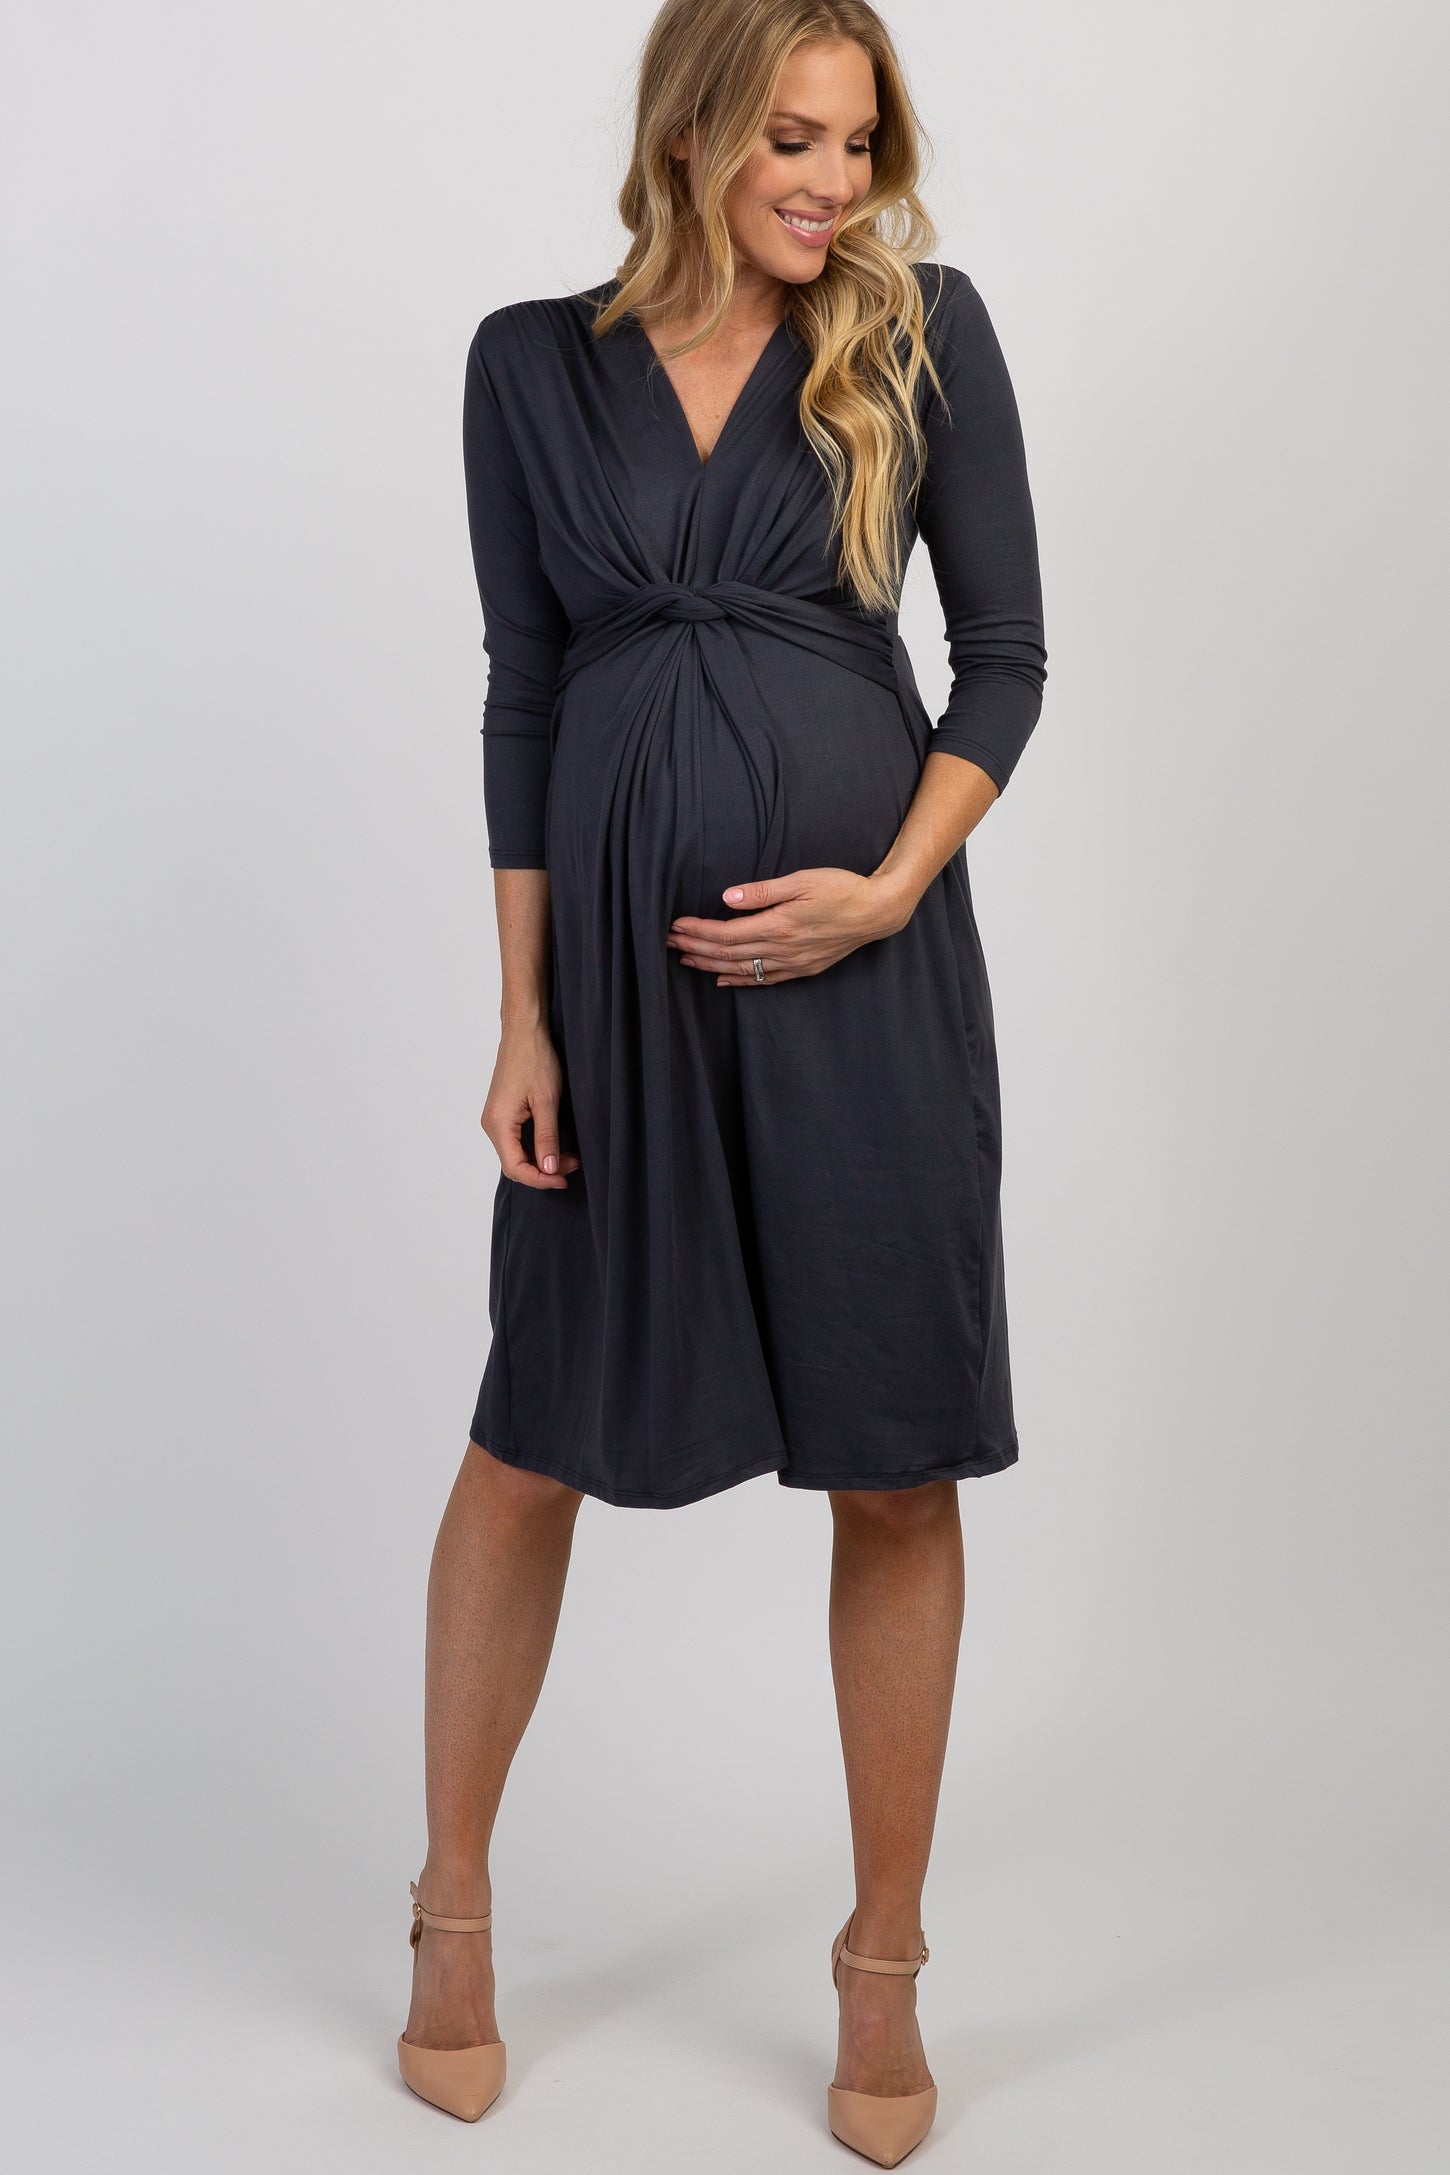 Charcoal Twist Front 3/4 Sleeve Maternity Dress